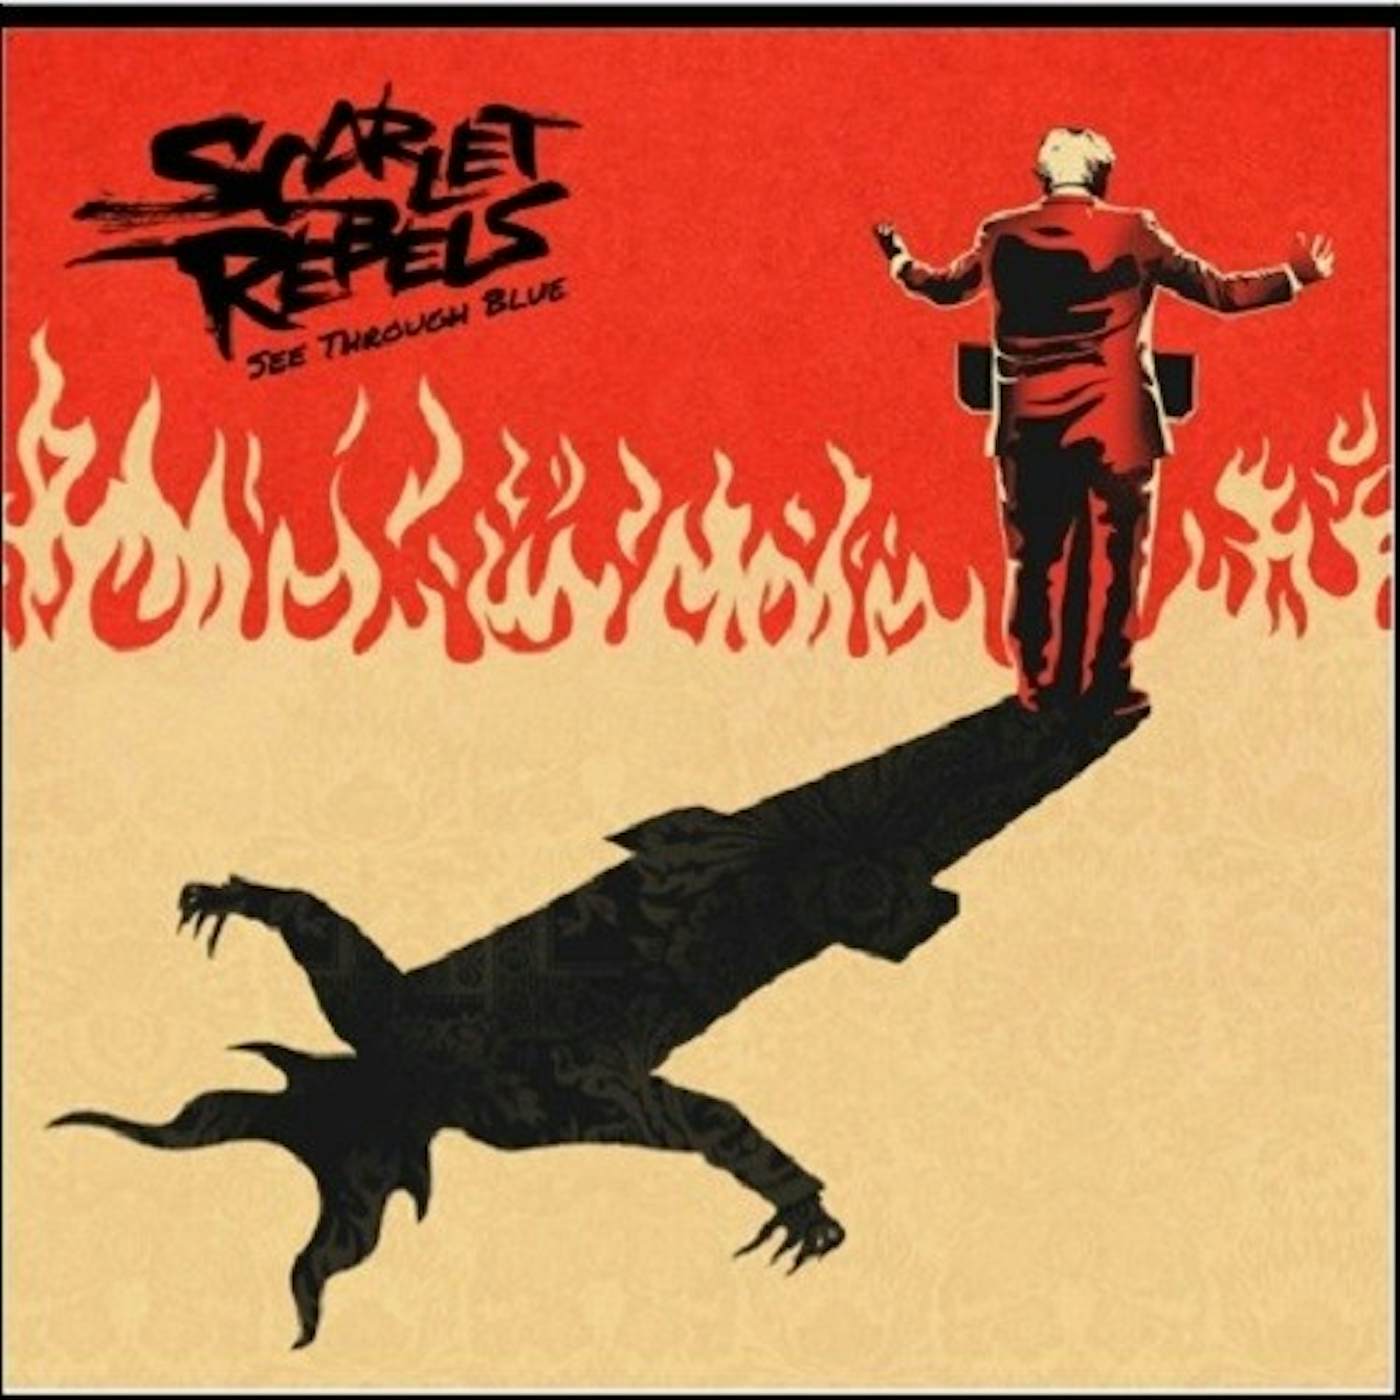 Scarlet Rebels See Through Blue Vinyl Record